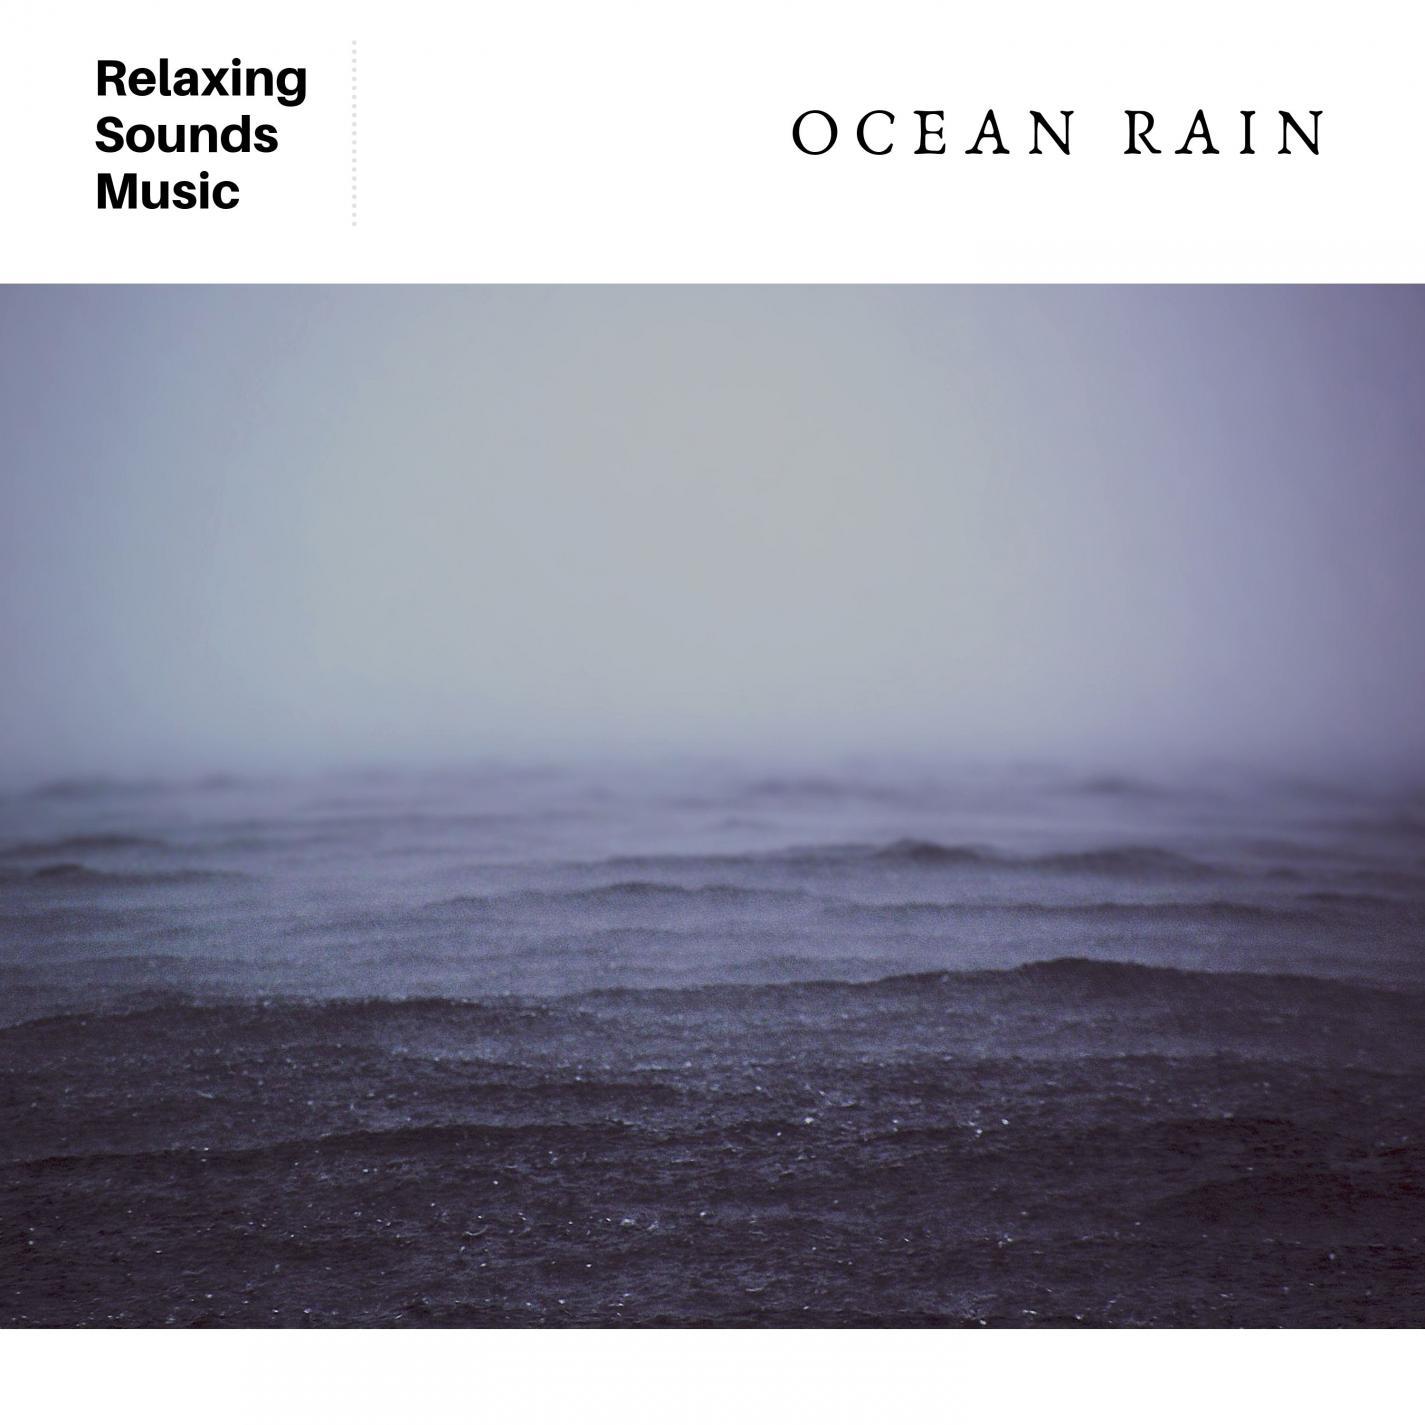 The Ocean Rain